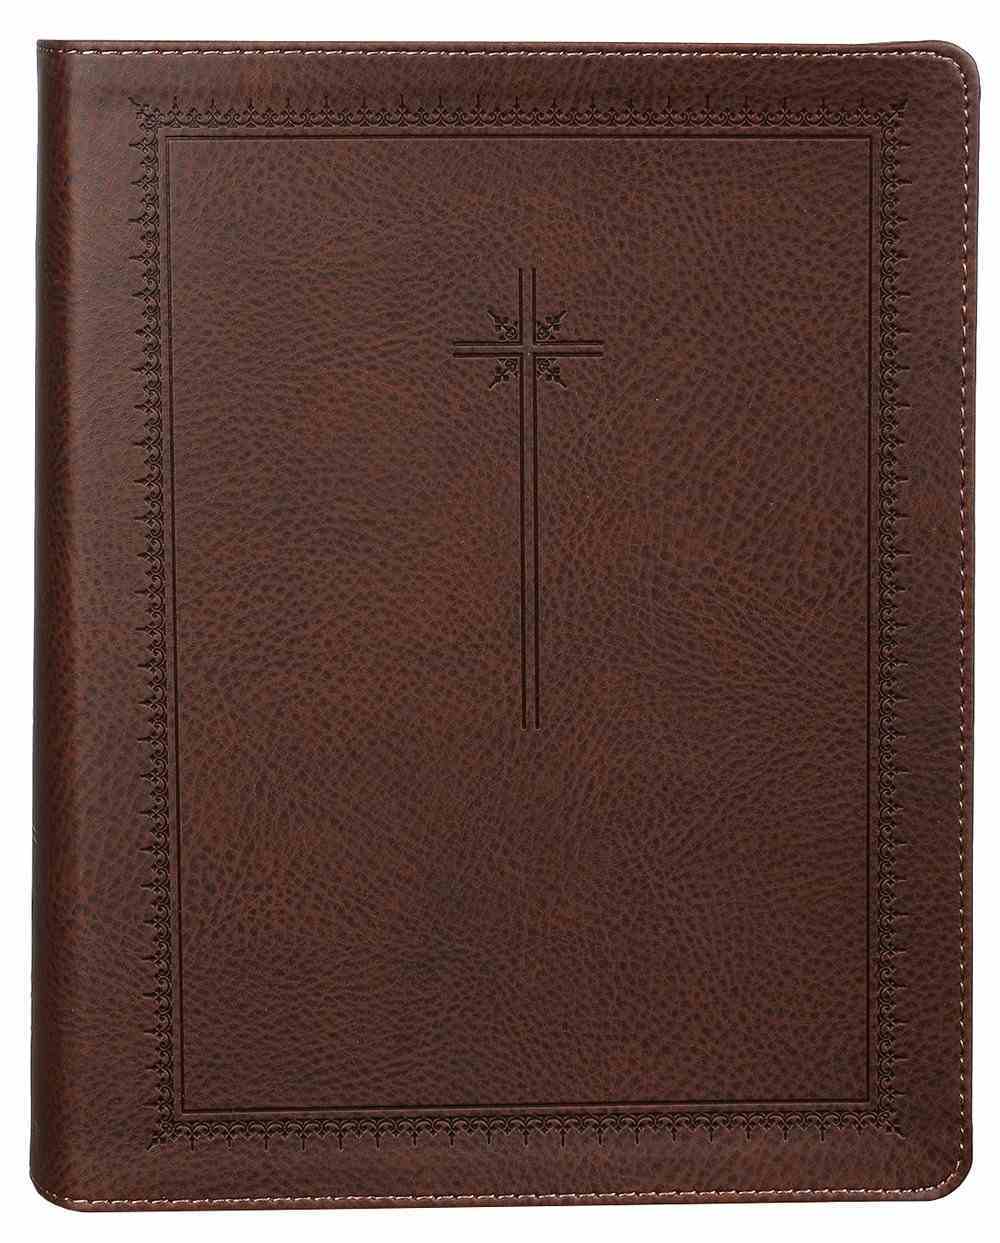 NIV Journal the Word Bible Large Print Brown (Black Letter Edition) Premium Imitation Leather